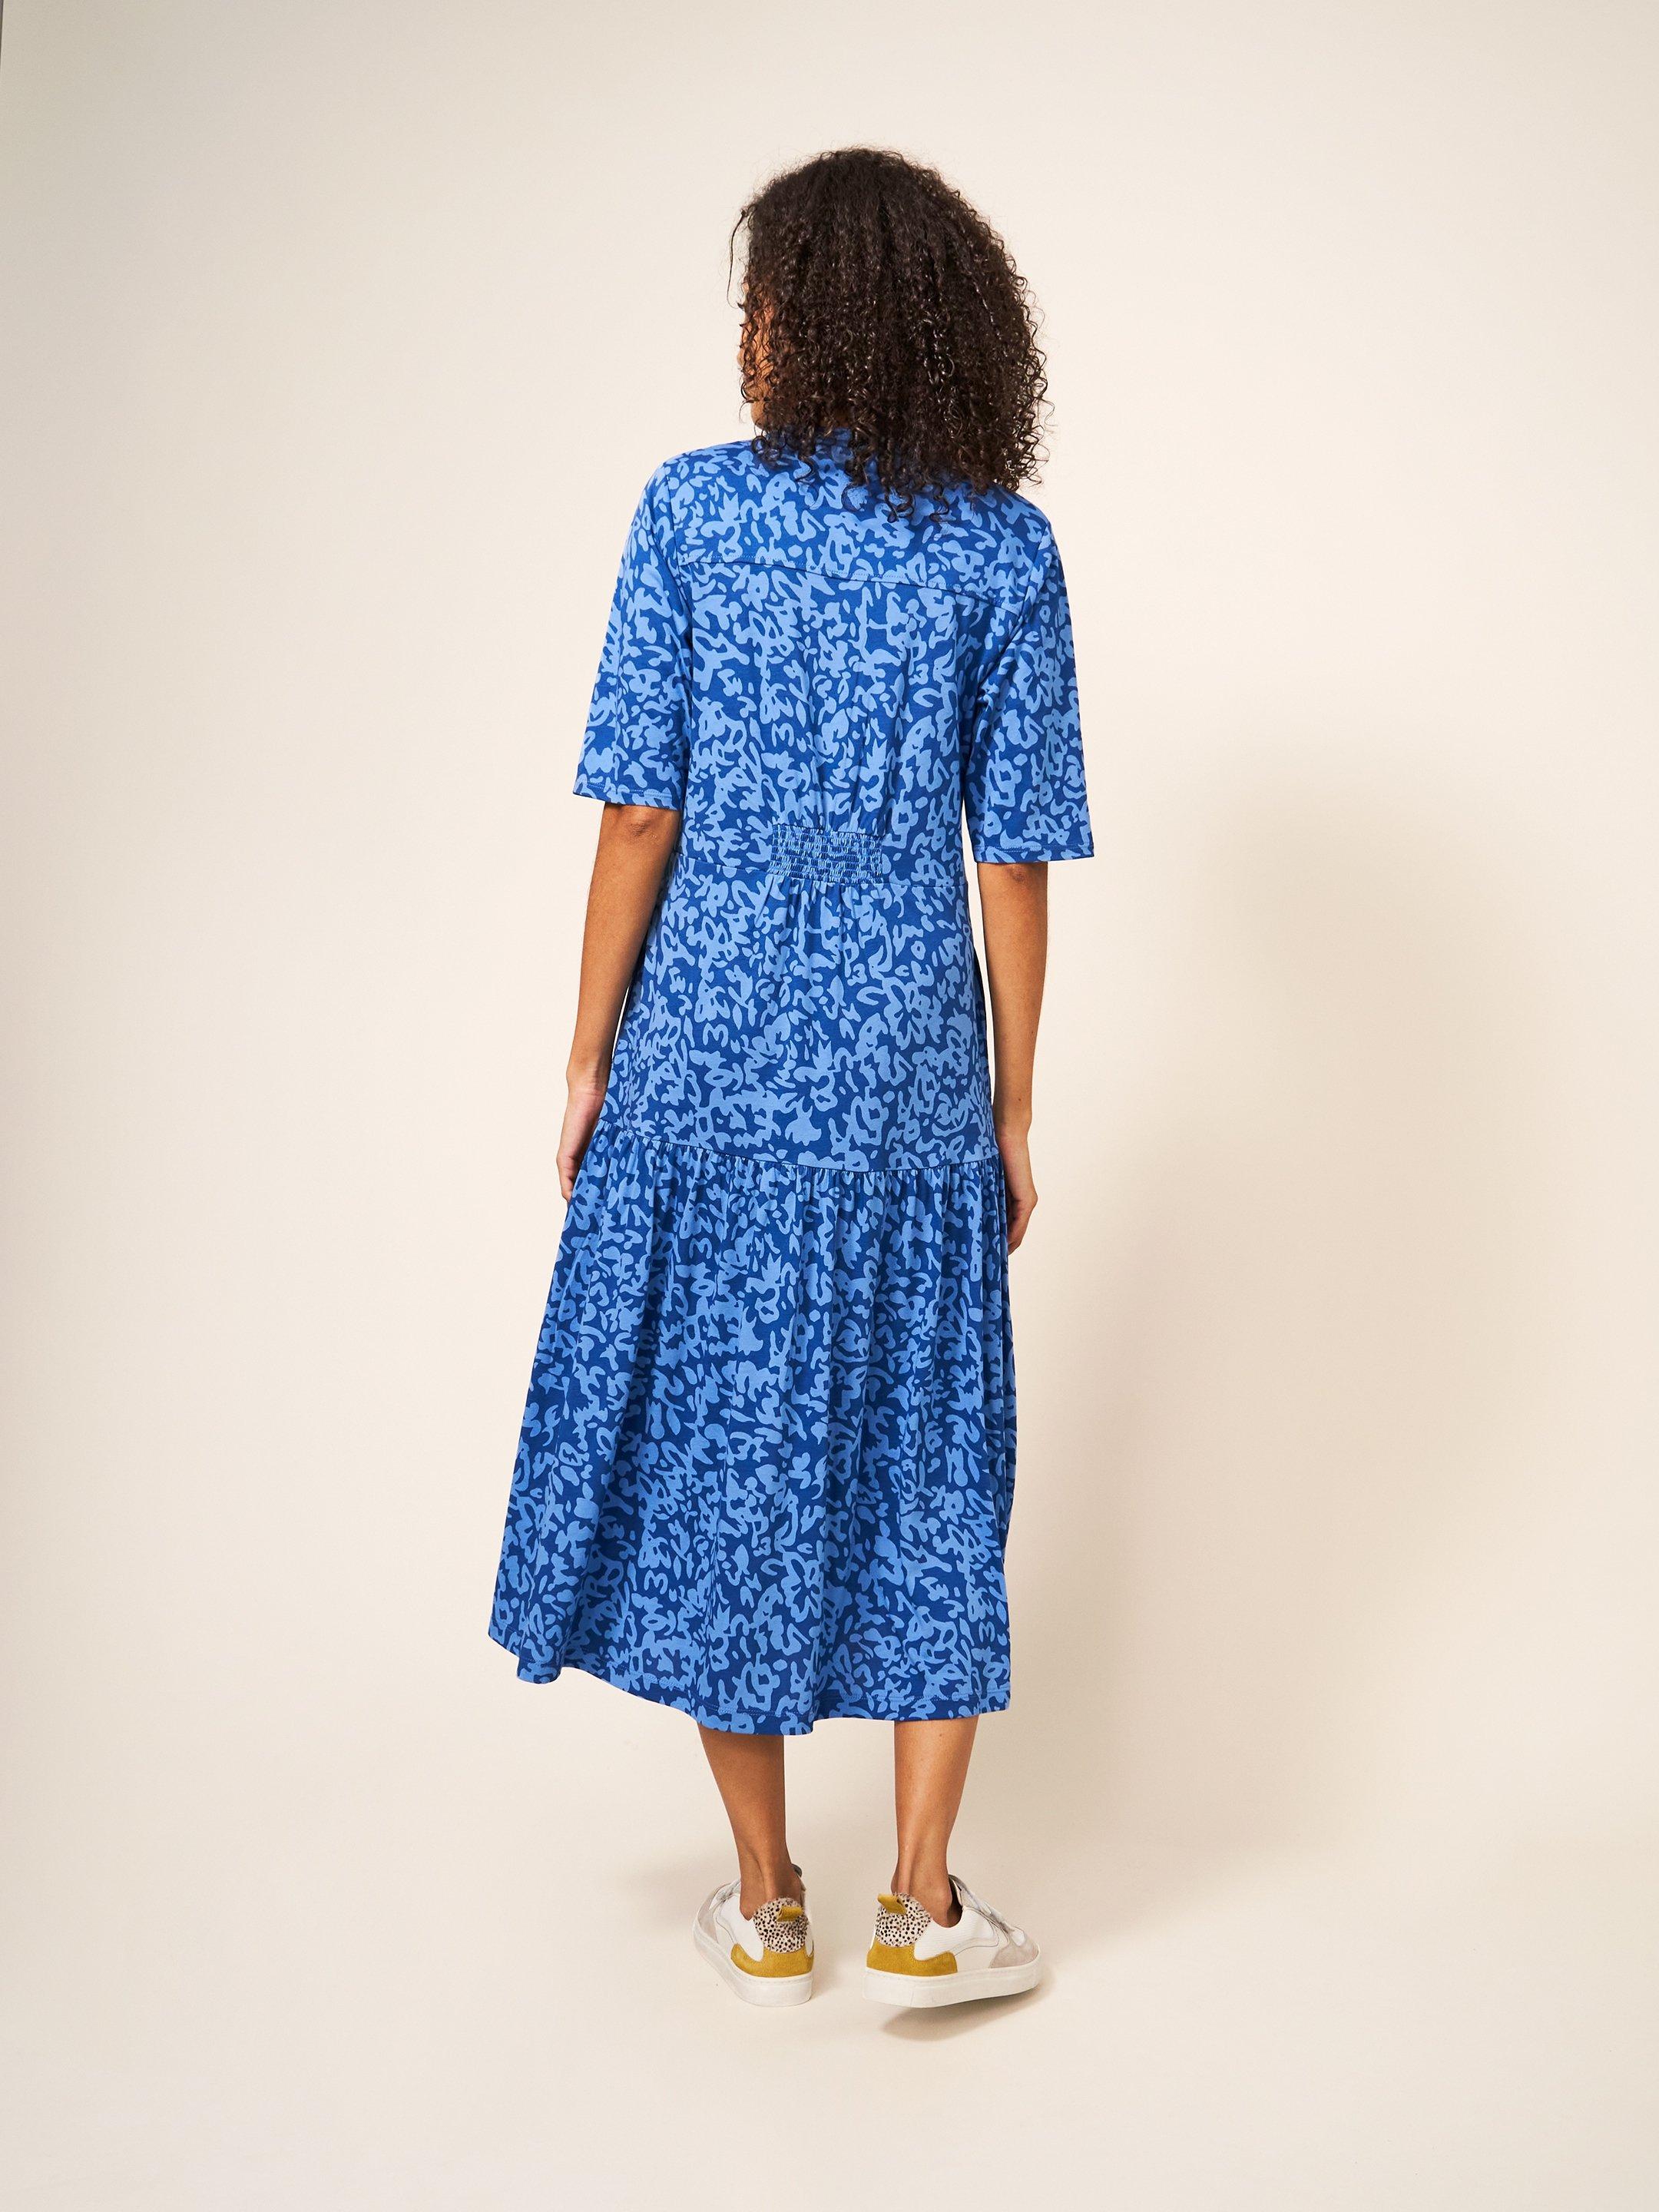 Sabina Jersey Dress in BLUE MLT - MODEL BACK